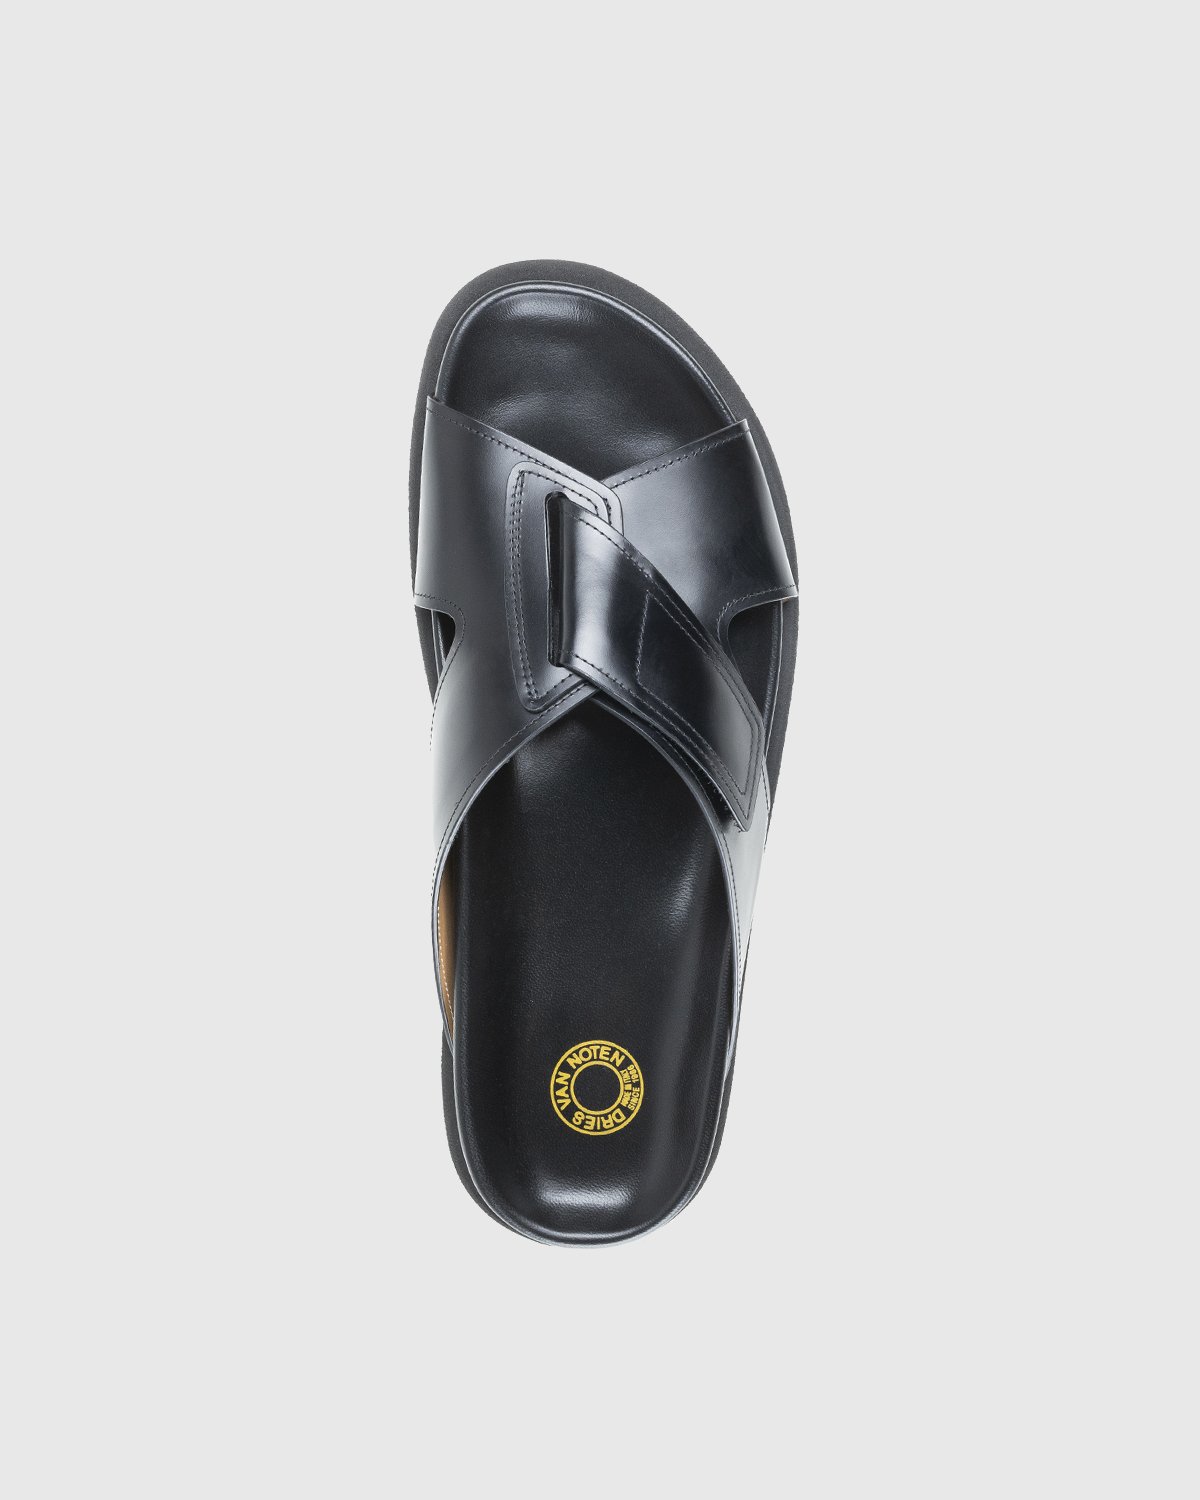 Dries van Noten - Leather Criss-Cross Sandals Black - Footwear - Black - Image 5